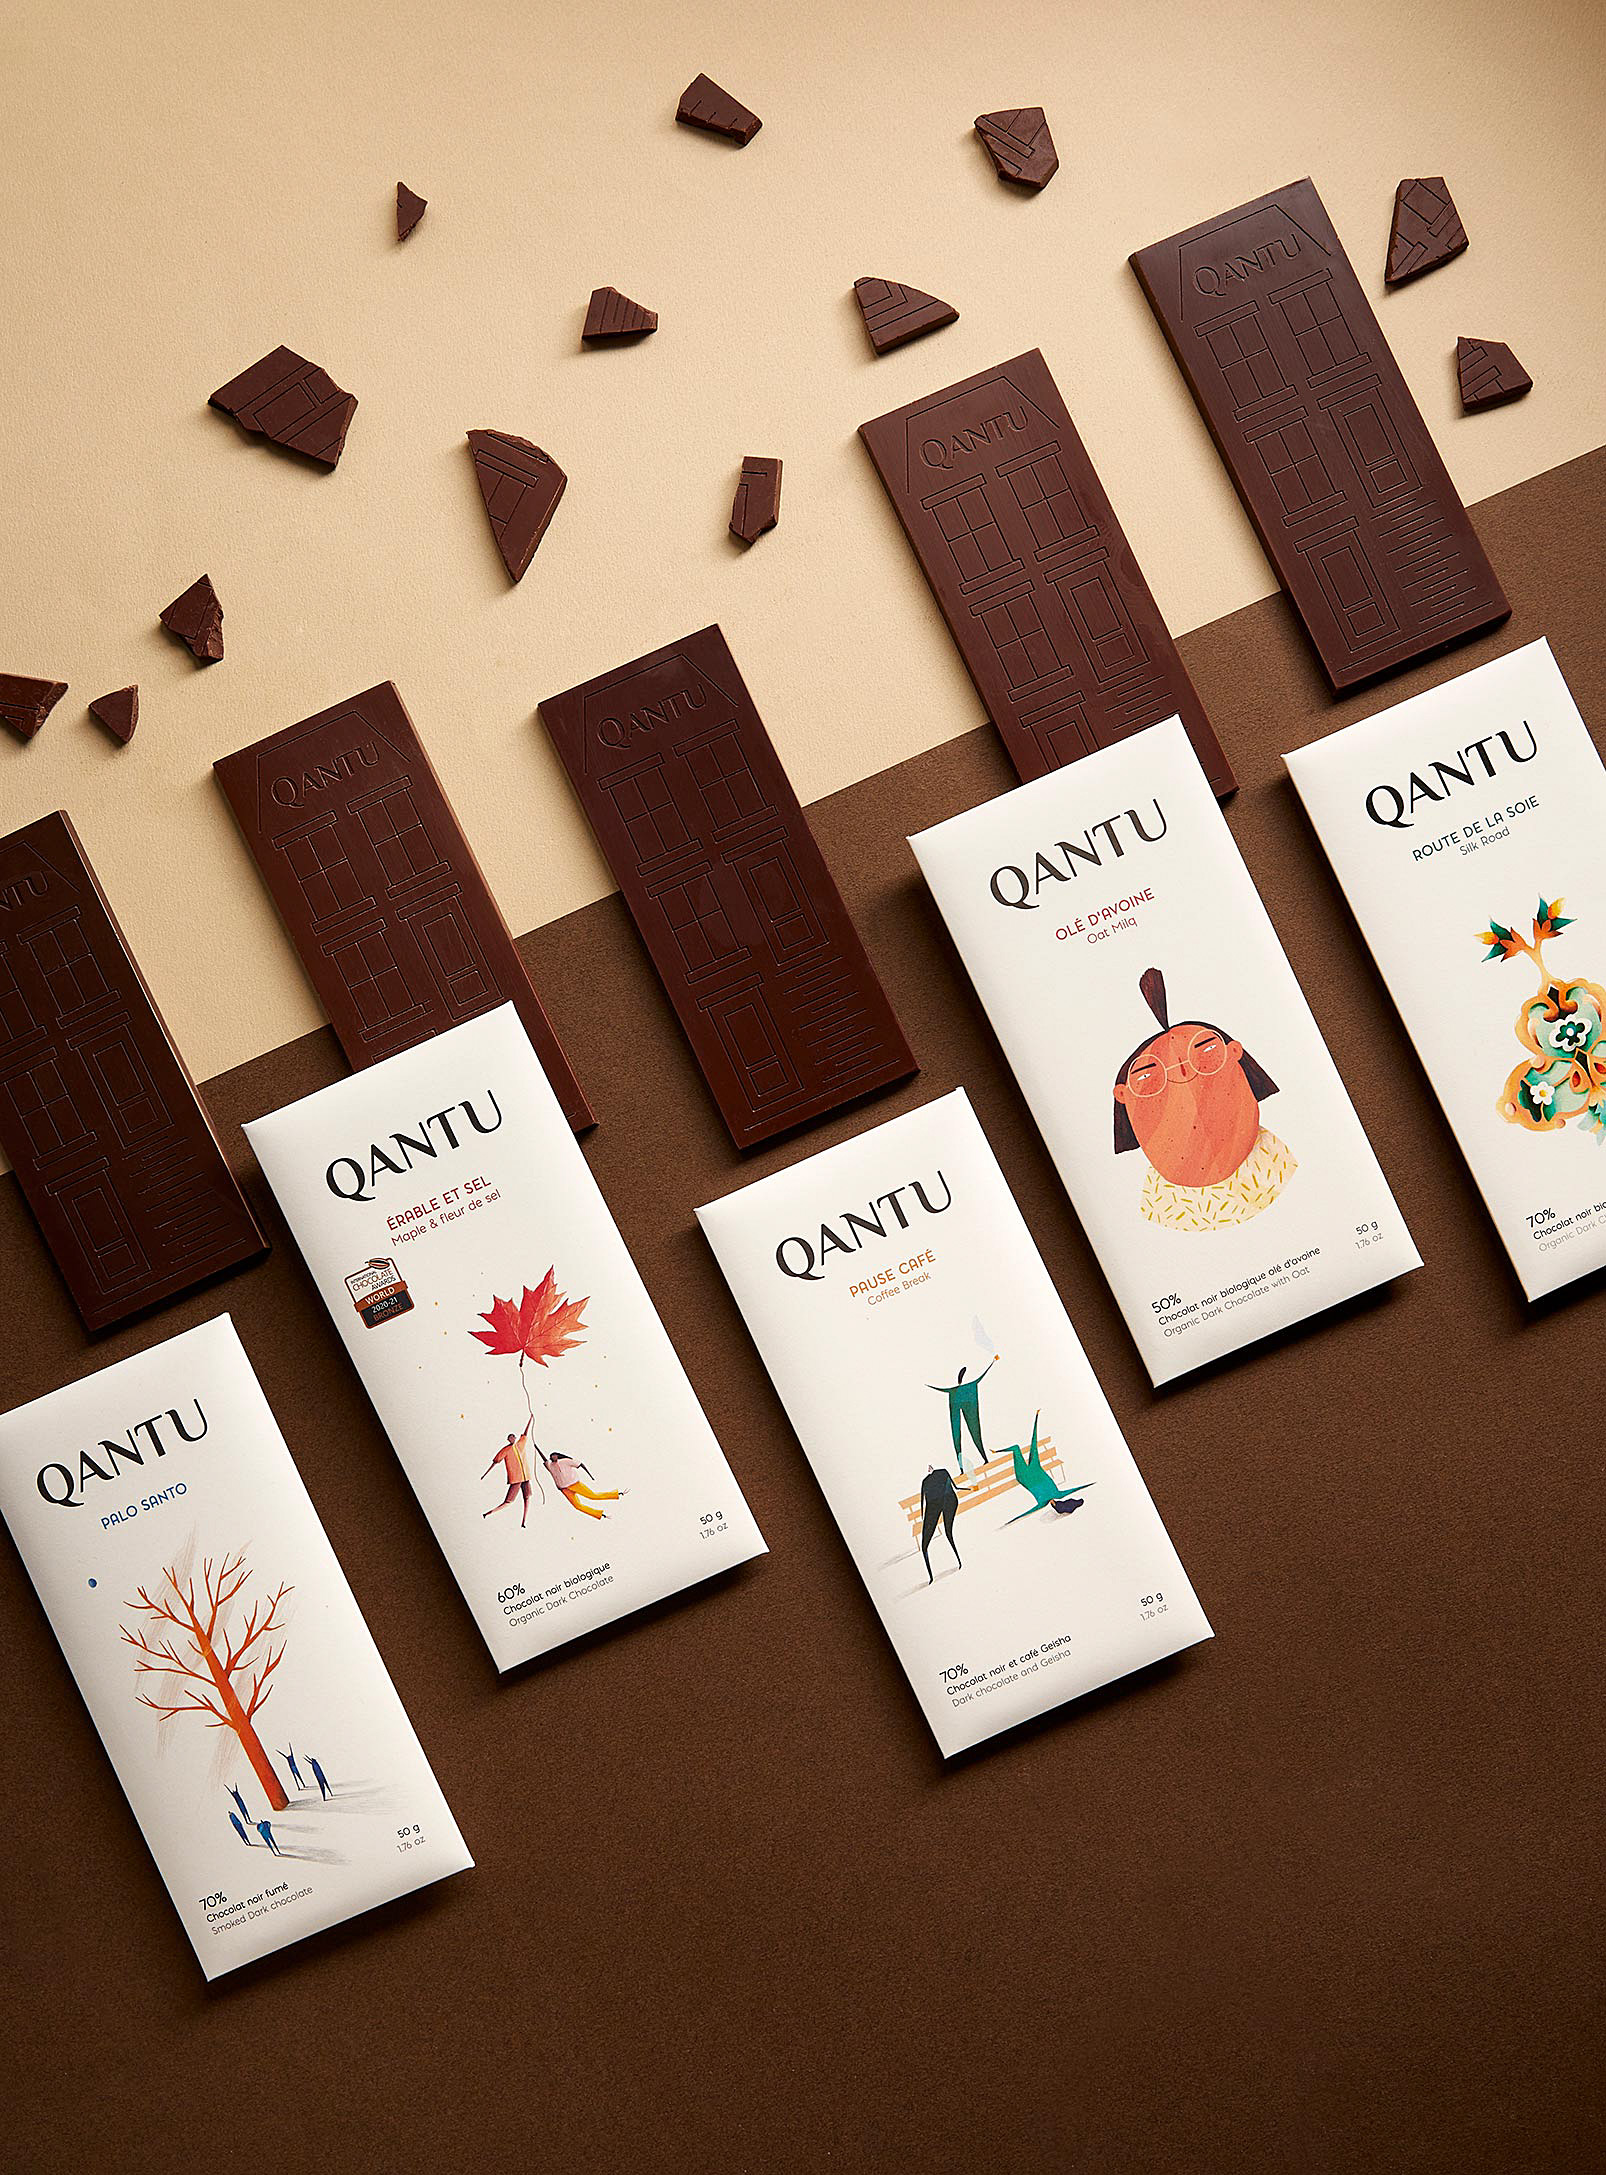 Qantu - Dark chocolate discovery set 5 bars